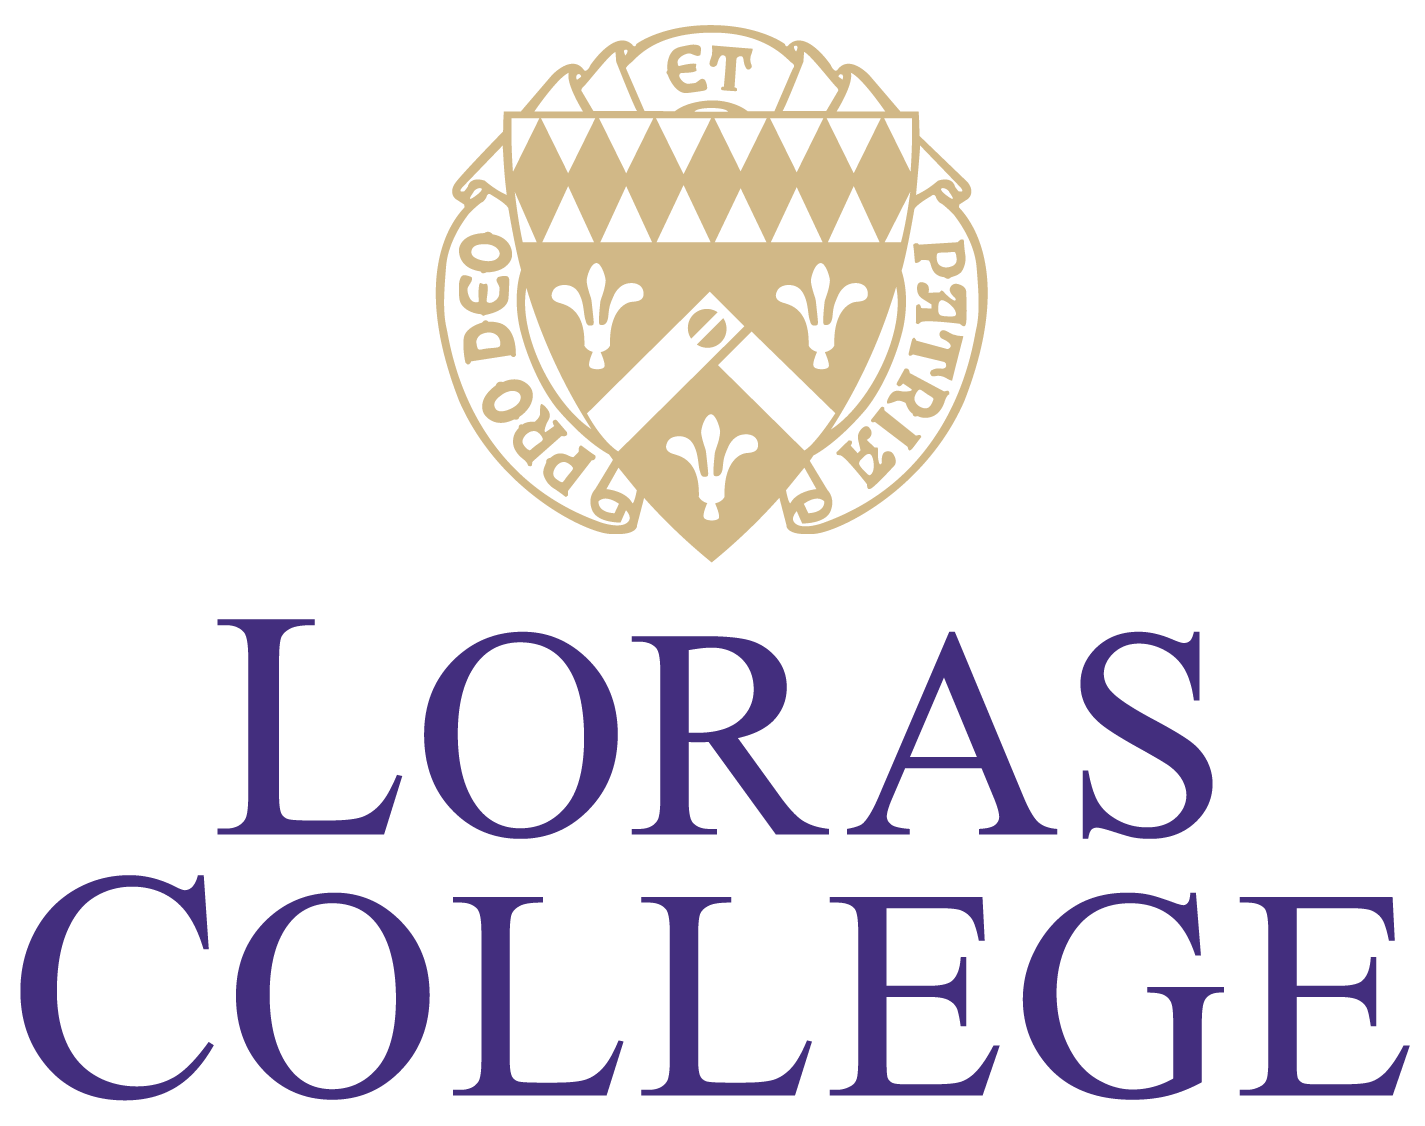 Loras College, private, liberal arts, Catholic